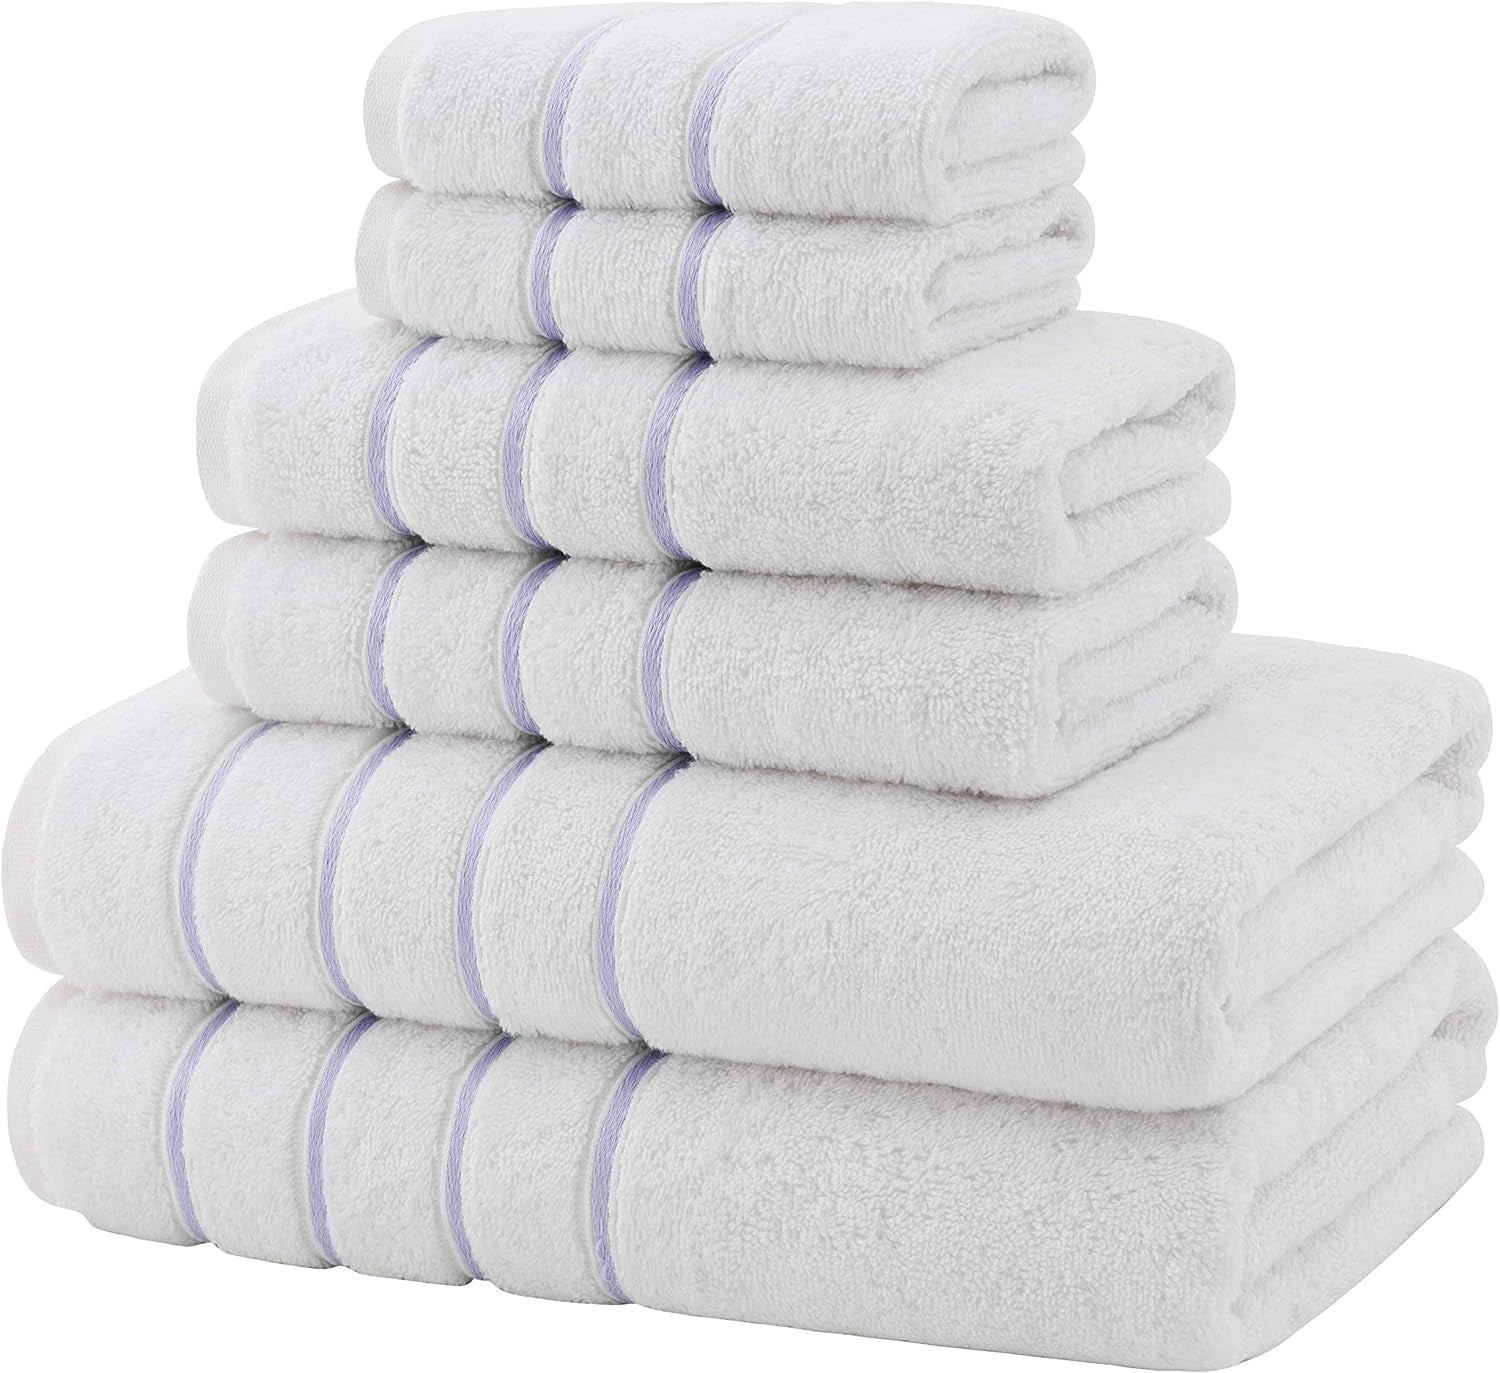 6 Piece White Towel Set, 100% Turkish Cotton Soft Hotel Towels, Quick Dry Turkish Towel Set for Bathroom, Lilac